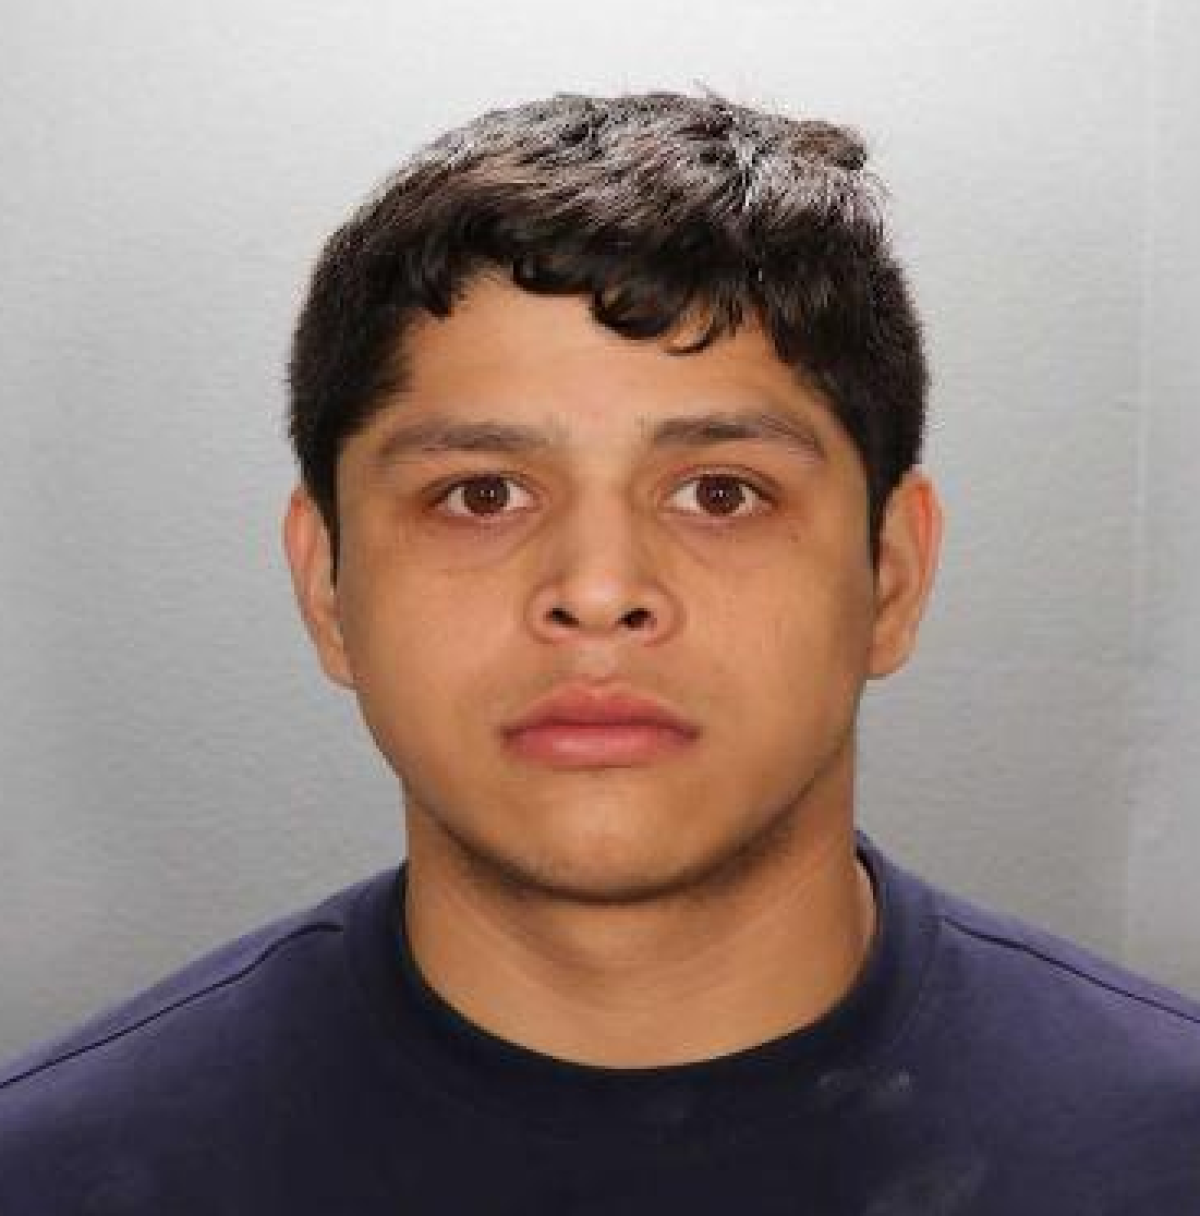 Rigoberto De Jesus Morales, 22, of Garden Grove was arrested by Fountain Valley police on Tuesday, April 13.